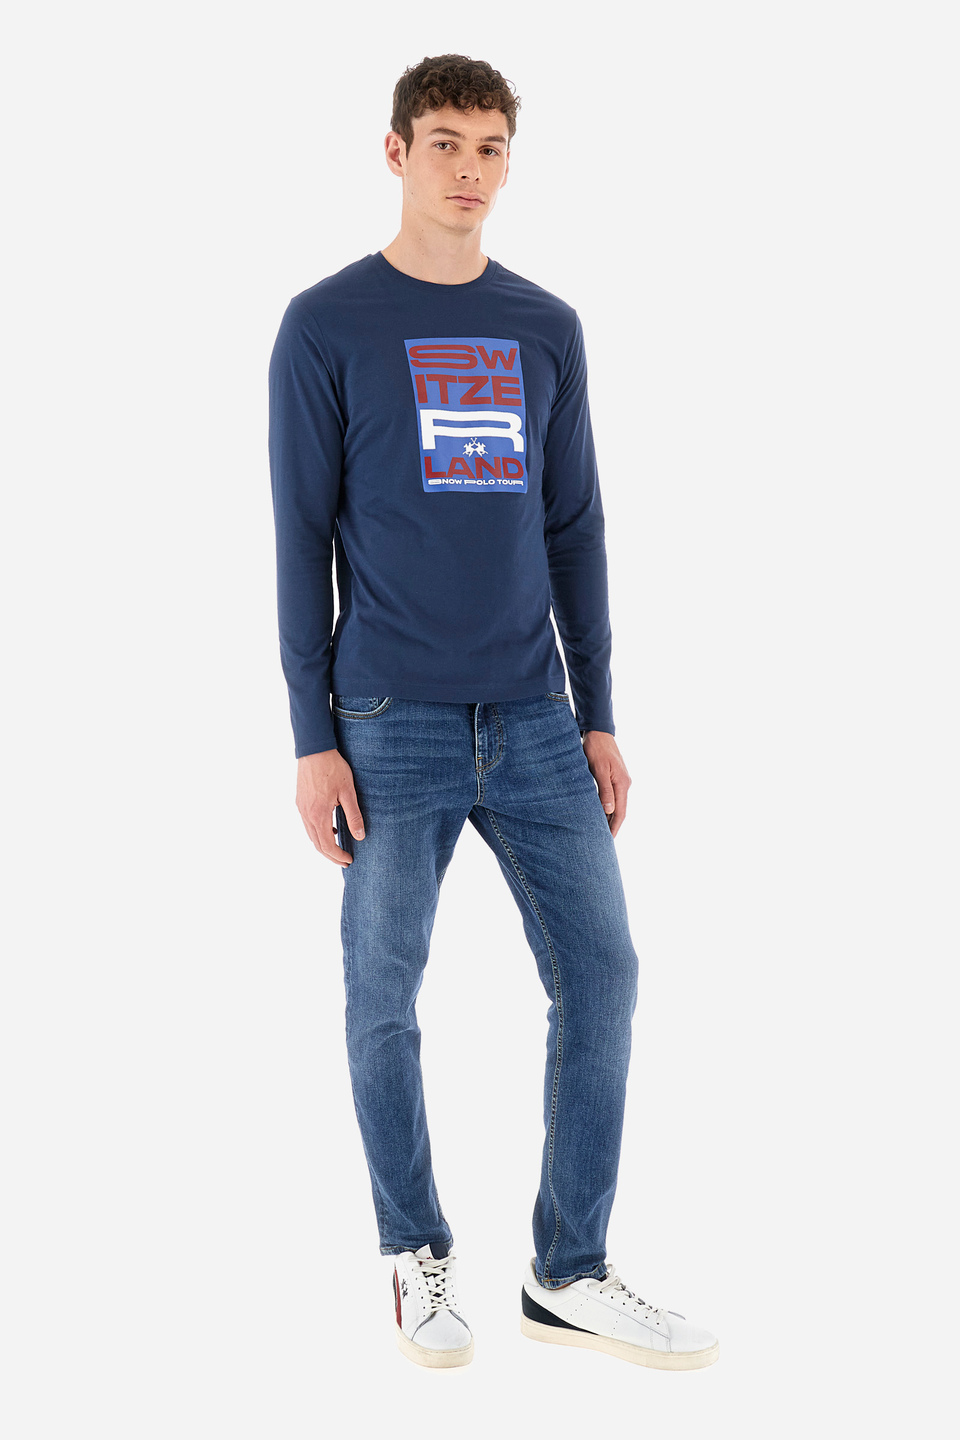 T-Shirt für Herren - Wendel | La Martina - Official Online Shop